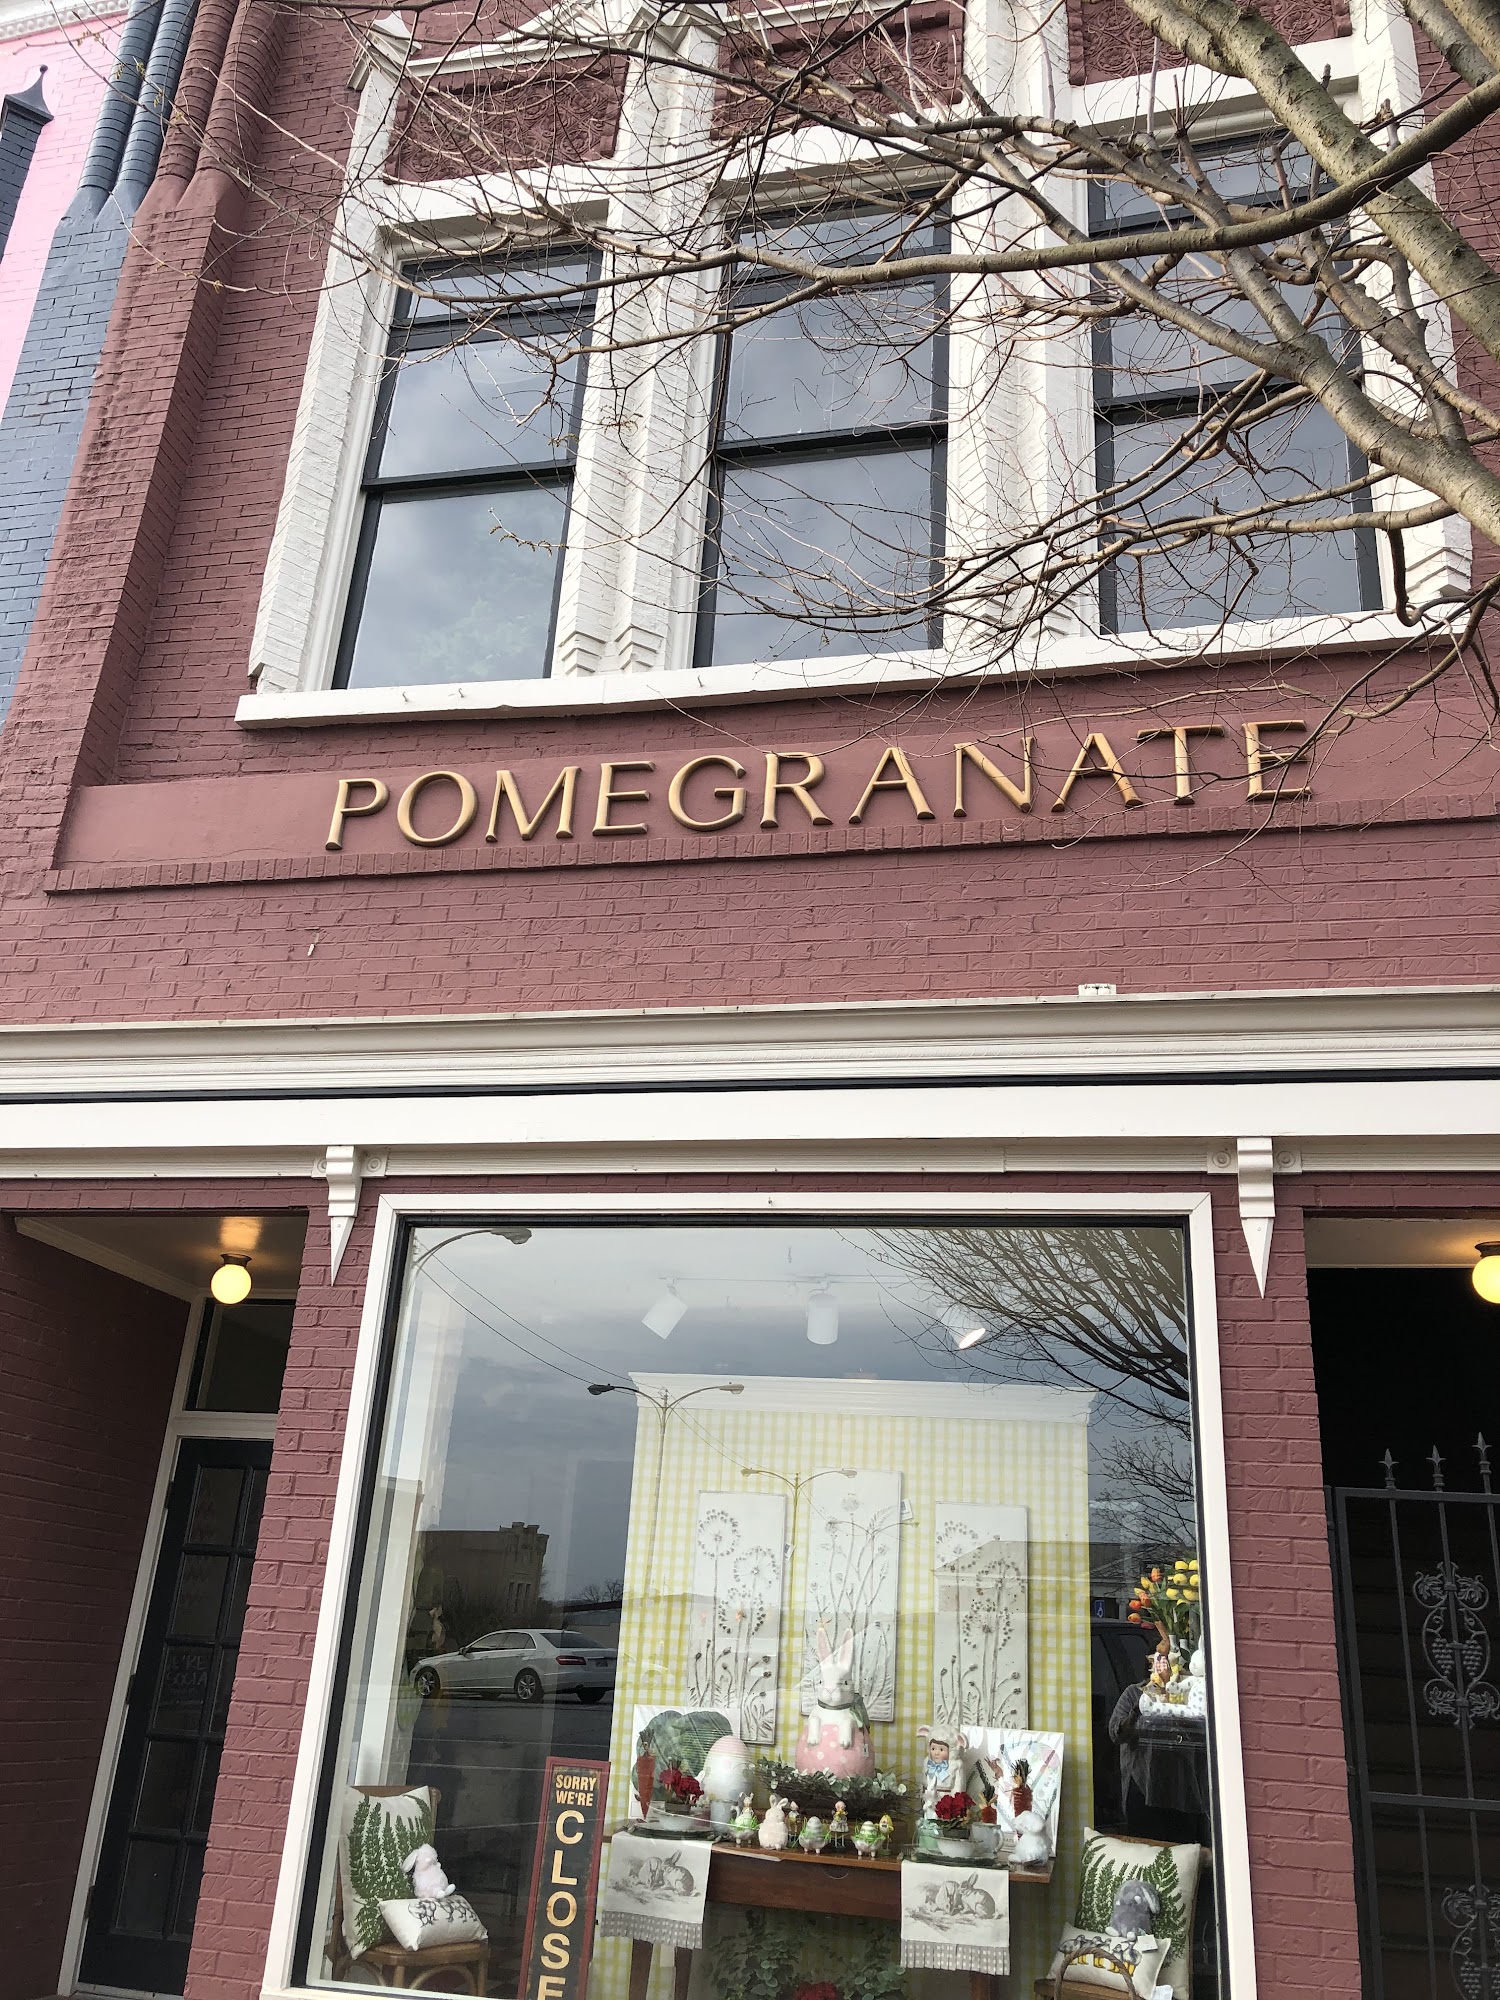 The Pomegranate Shoppe